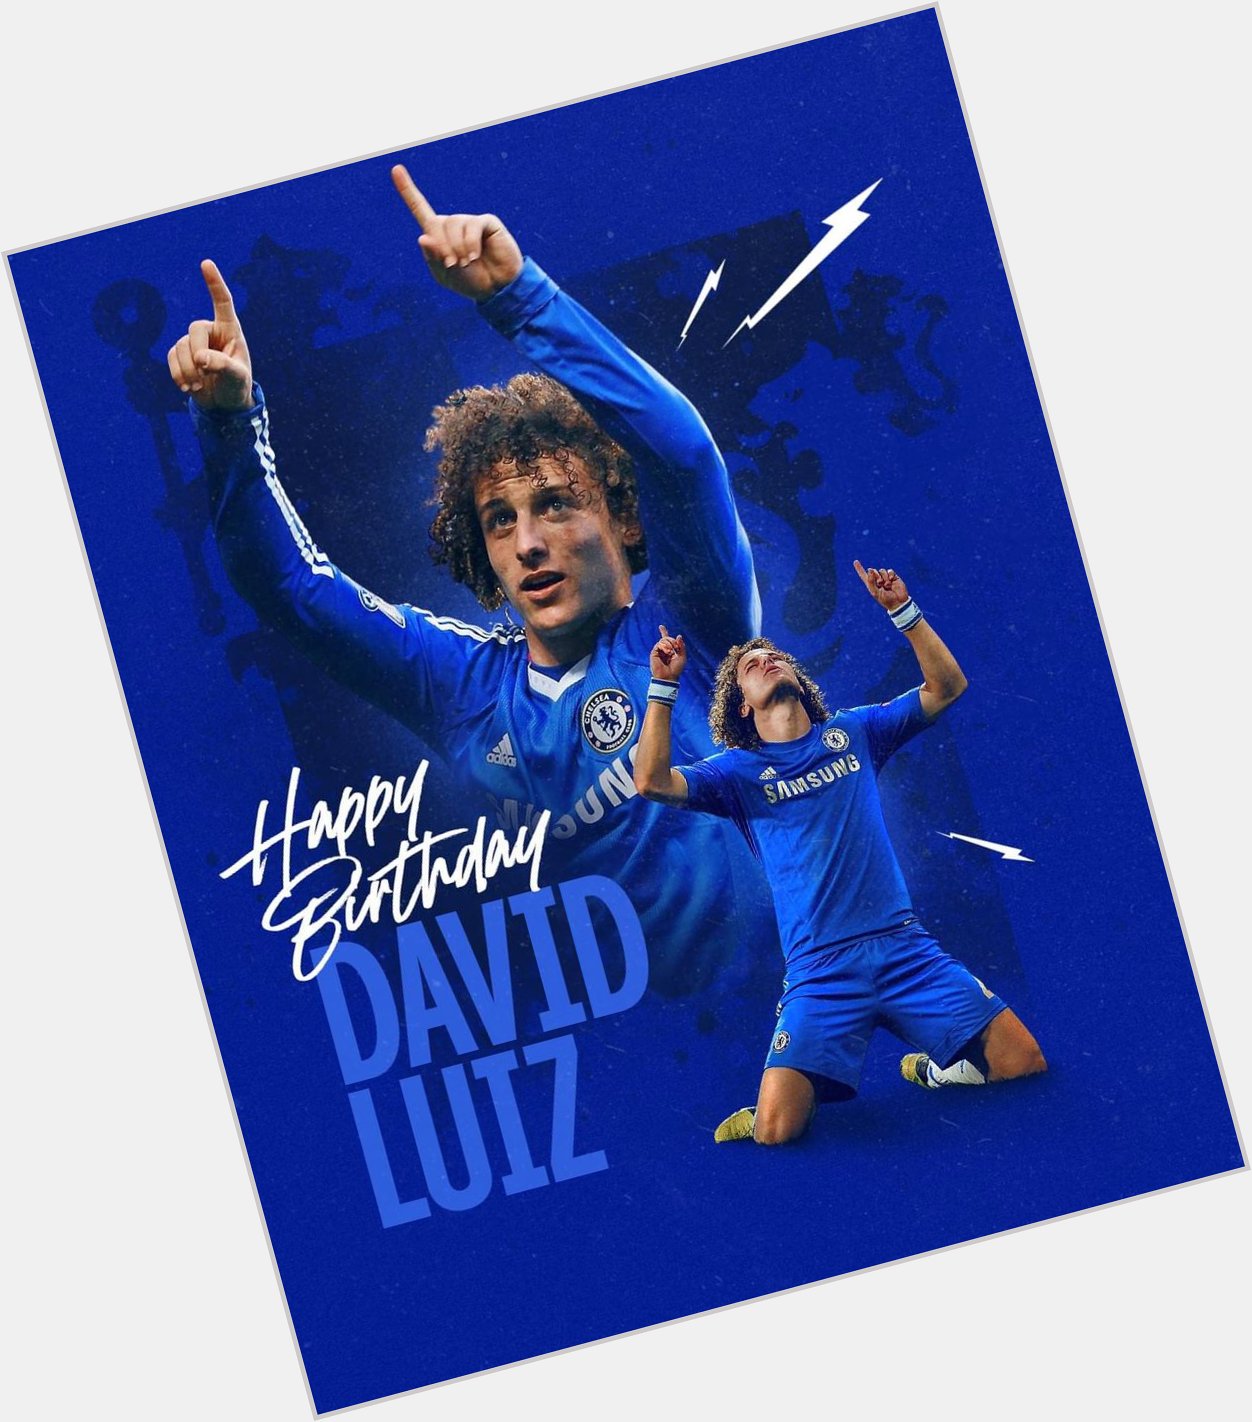 Wishing a Happy Birthday to David Luiz & John Obi Mikel who both turn 35 today! True Cult Heroes 